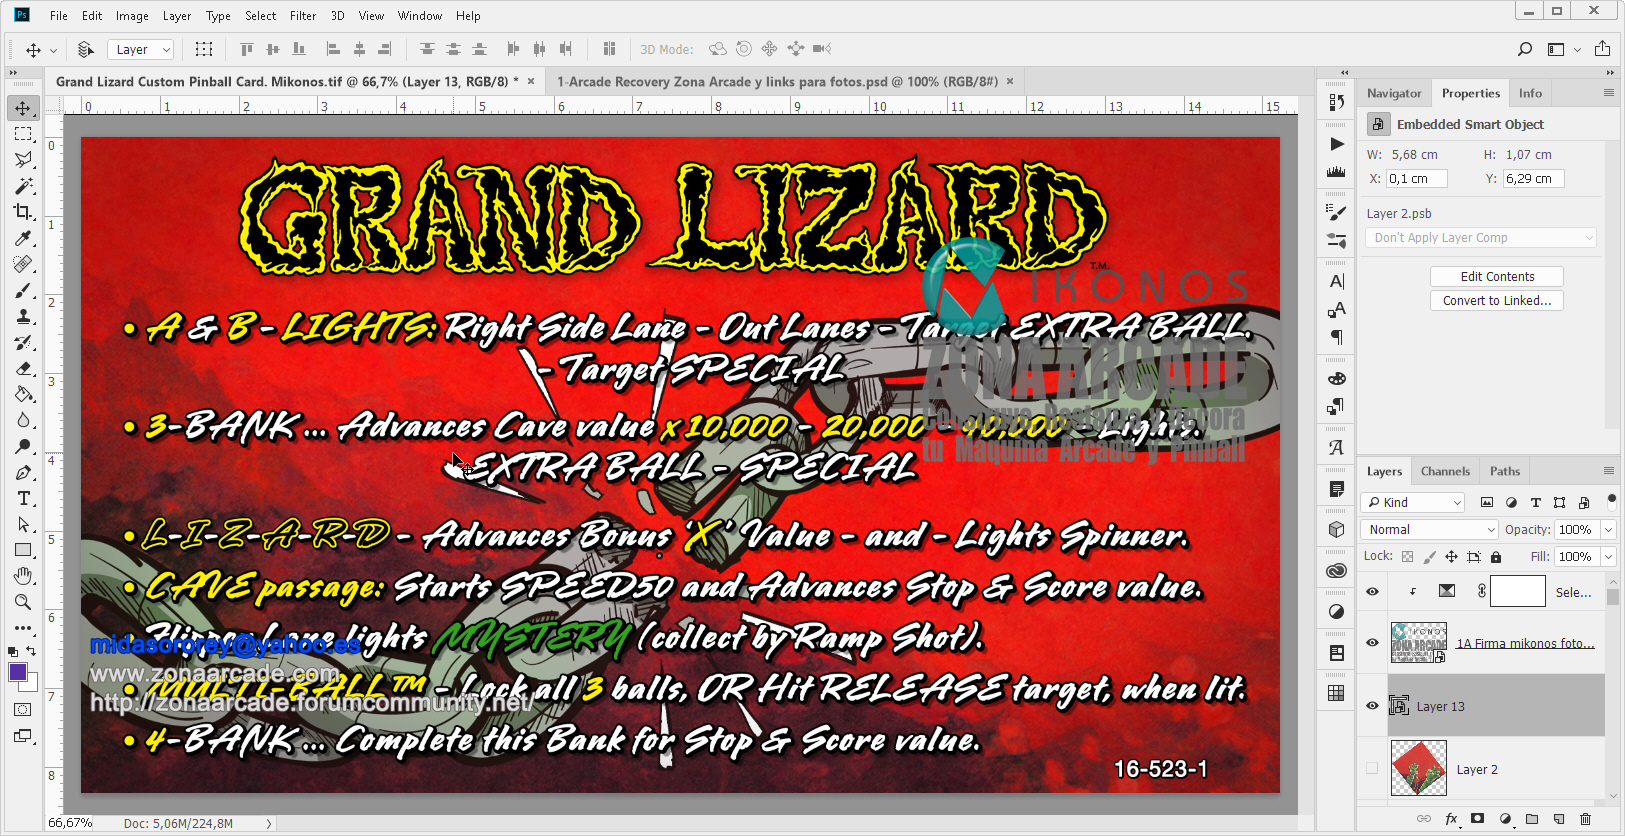 Grand-Lizard-Pinball-Custom-Card-Rules-Mikonos1